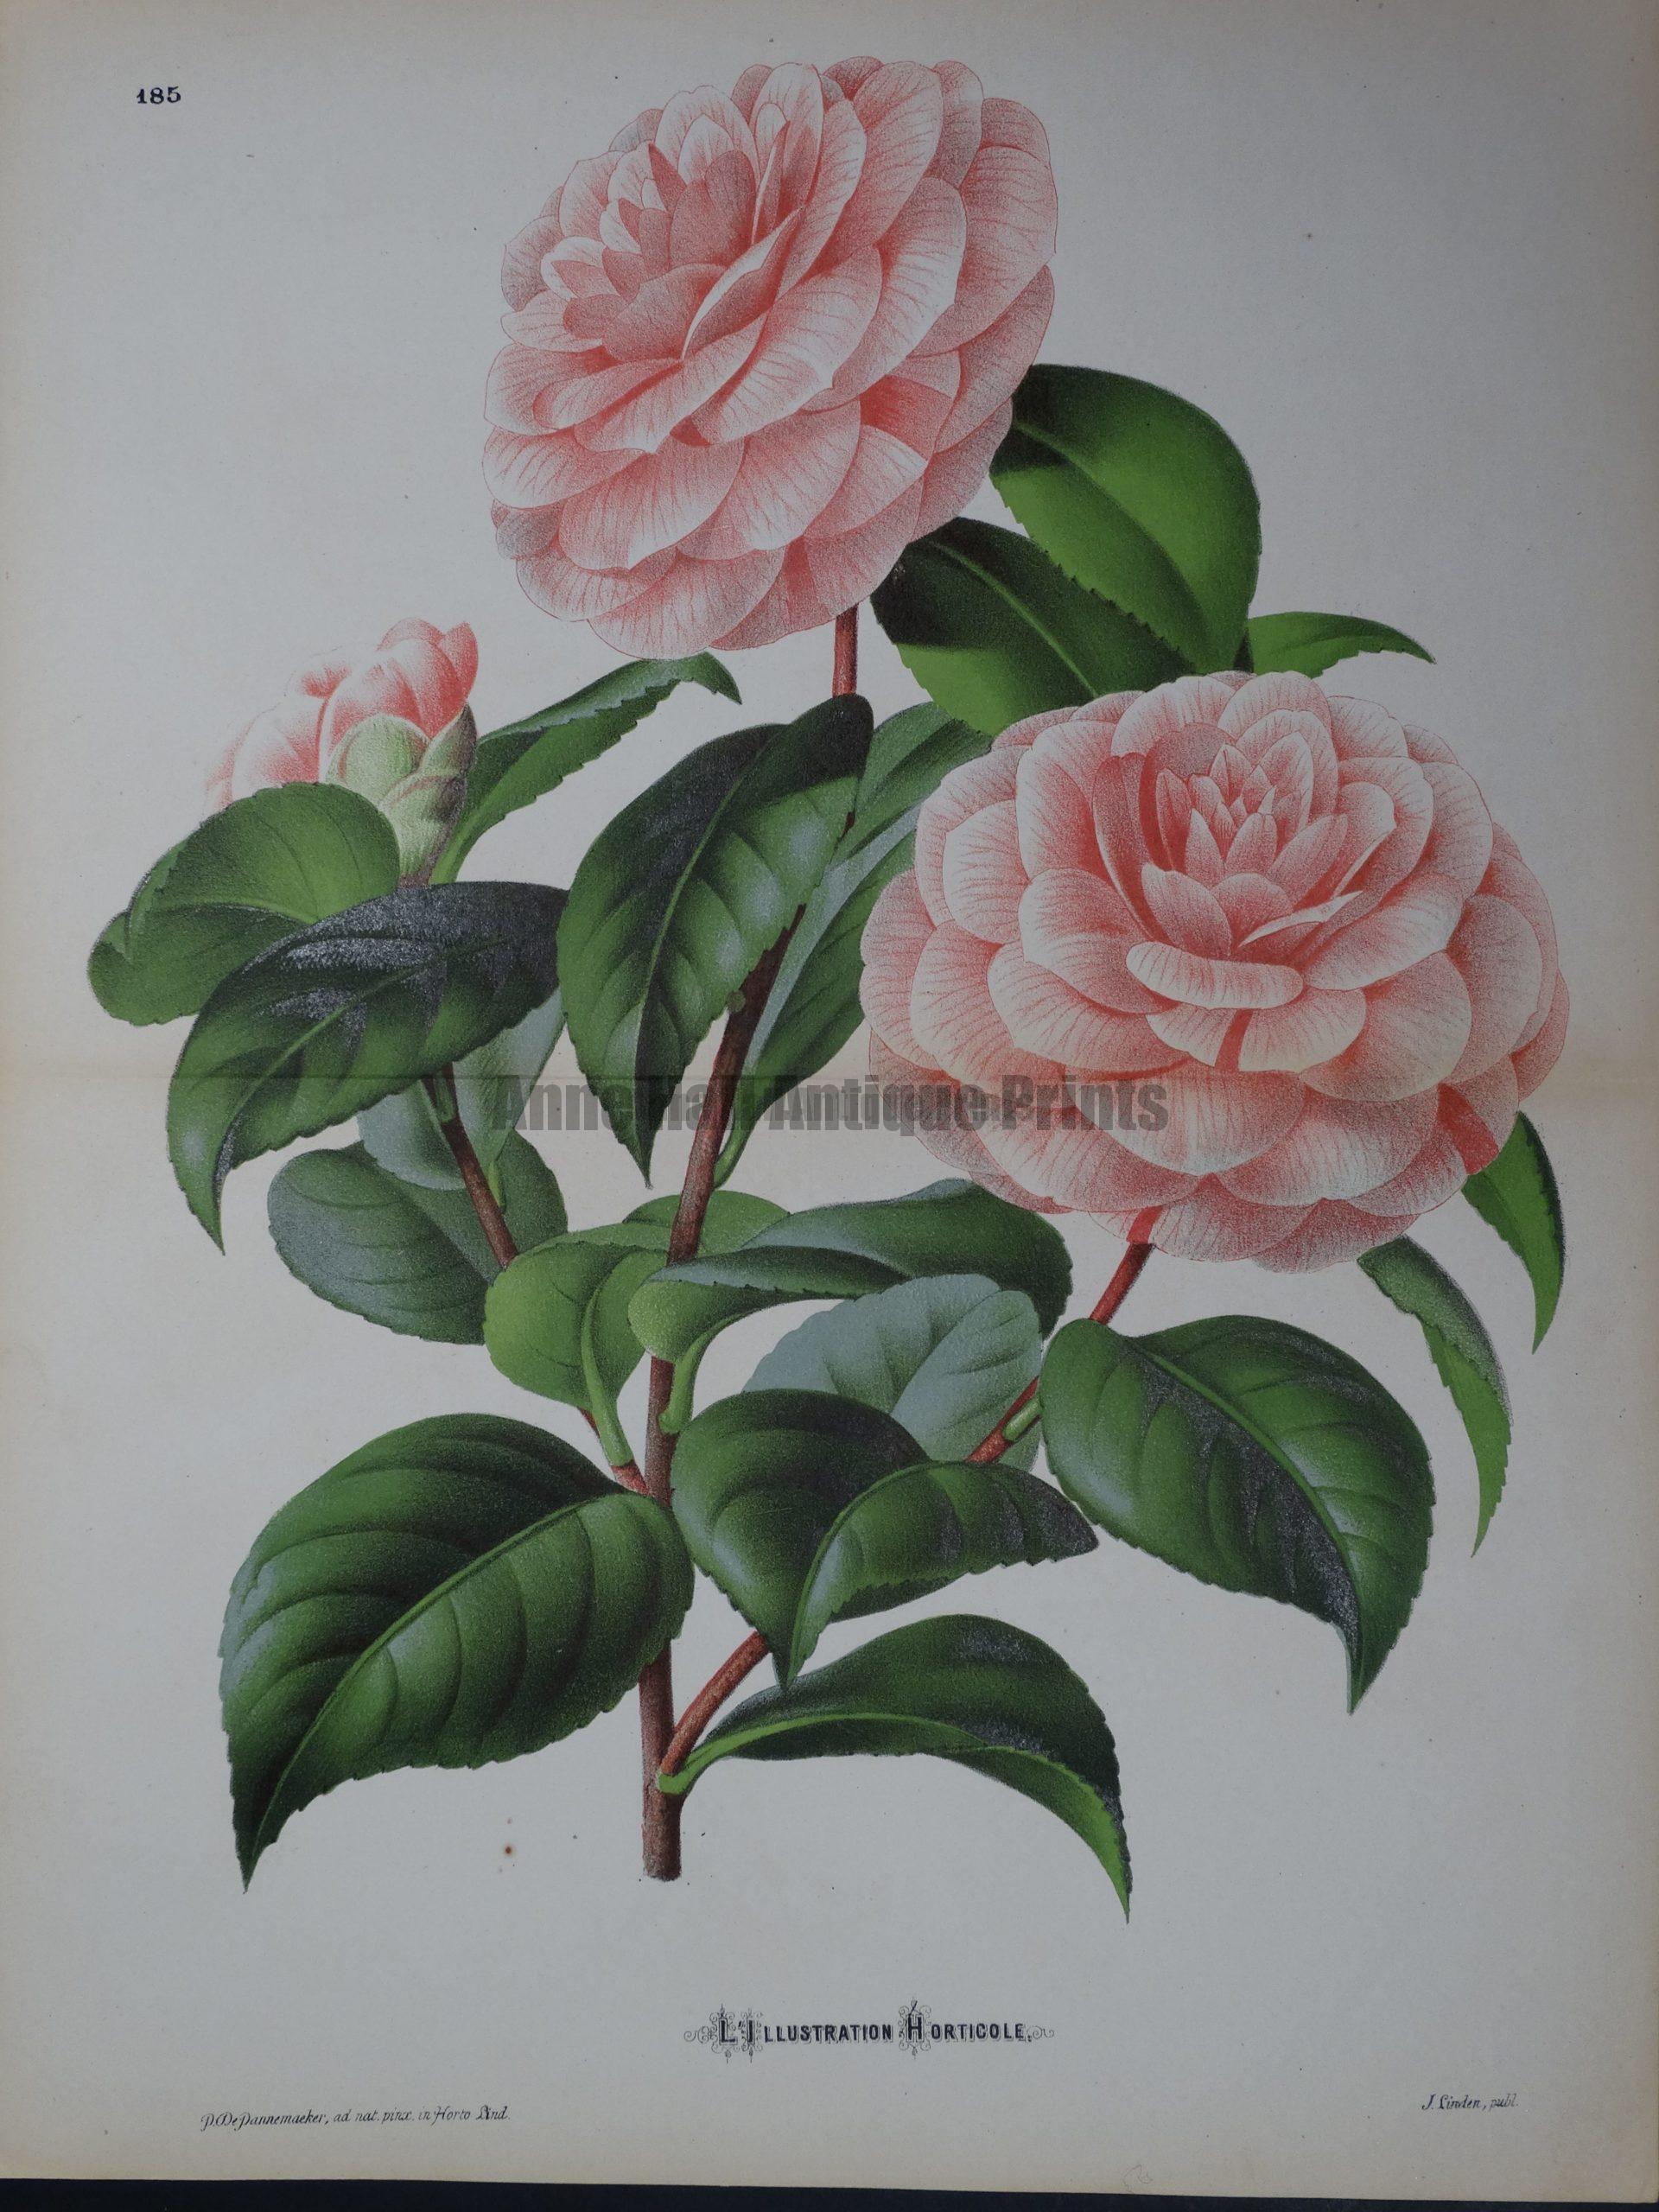 Linden Camellia #185